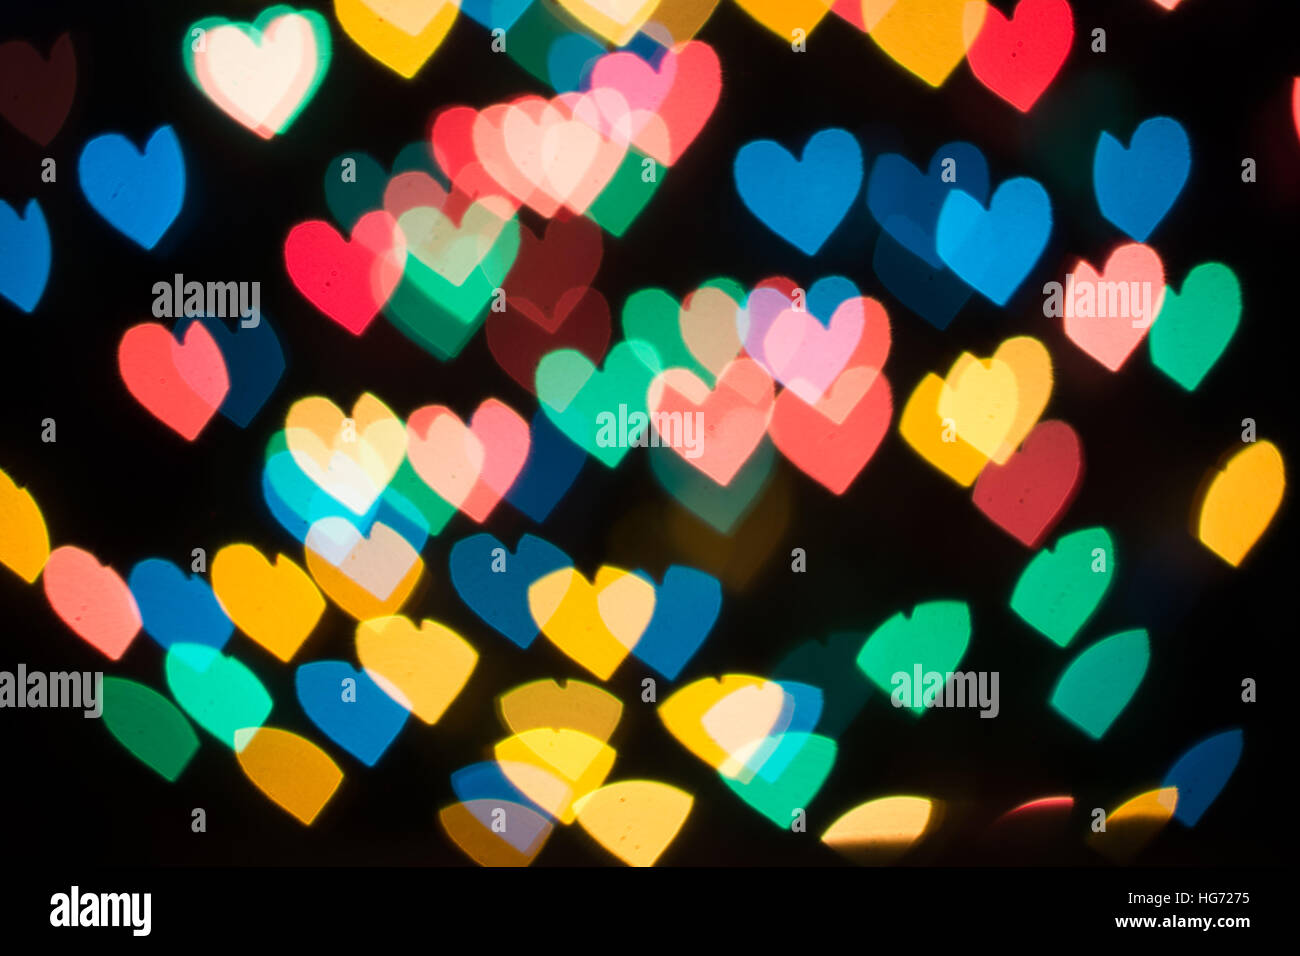 Heart shaped bokeh spread on dark background Stock Photo